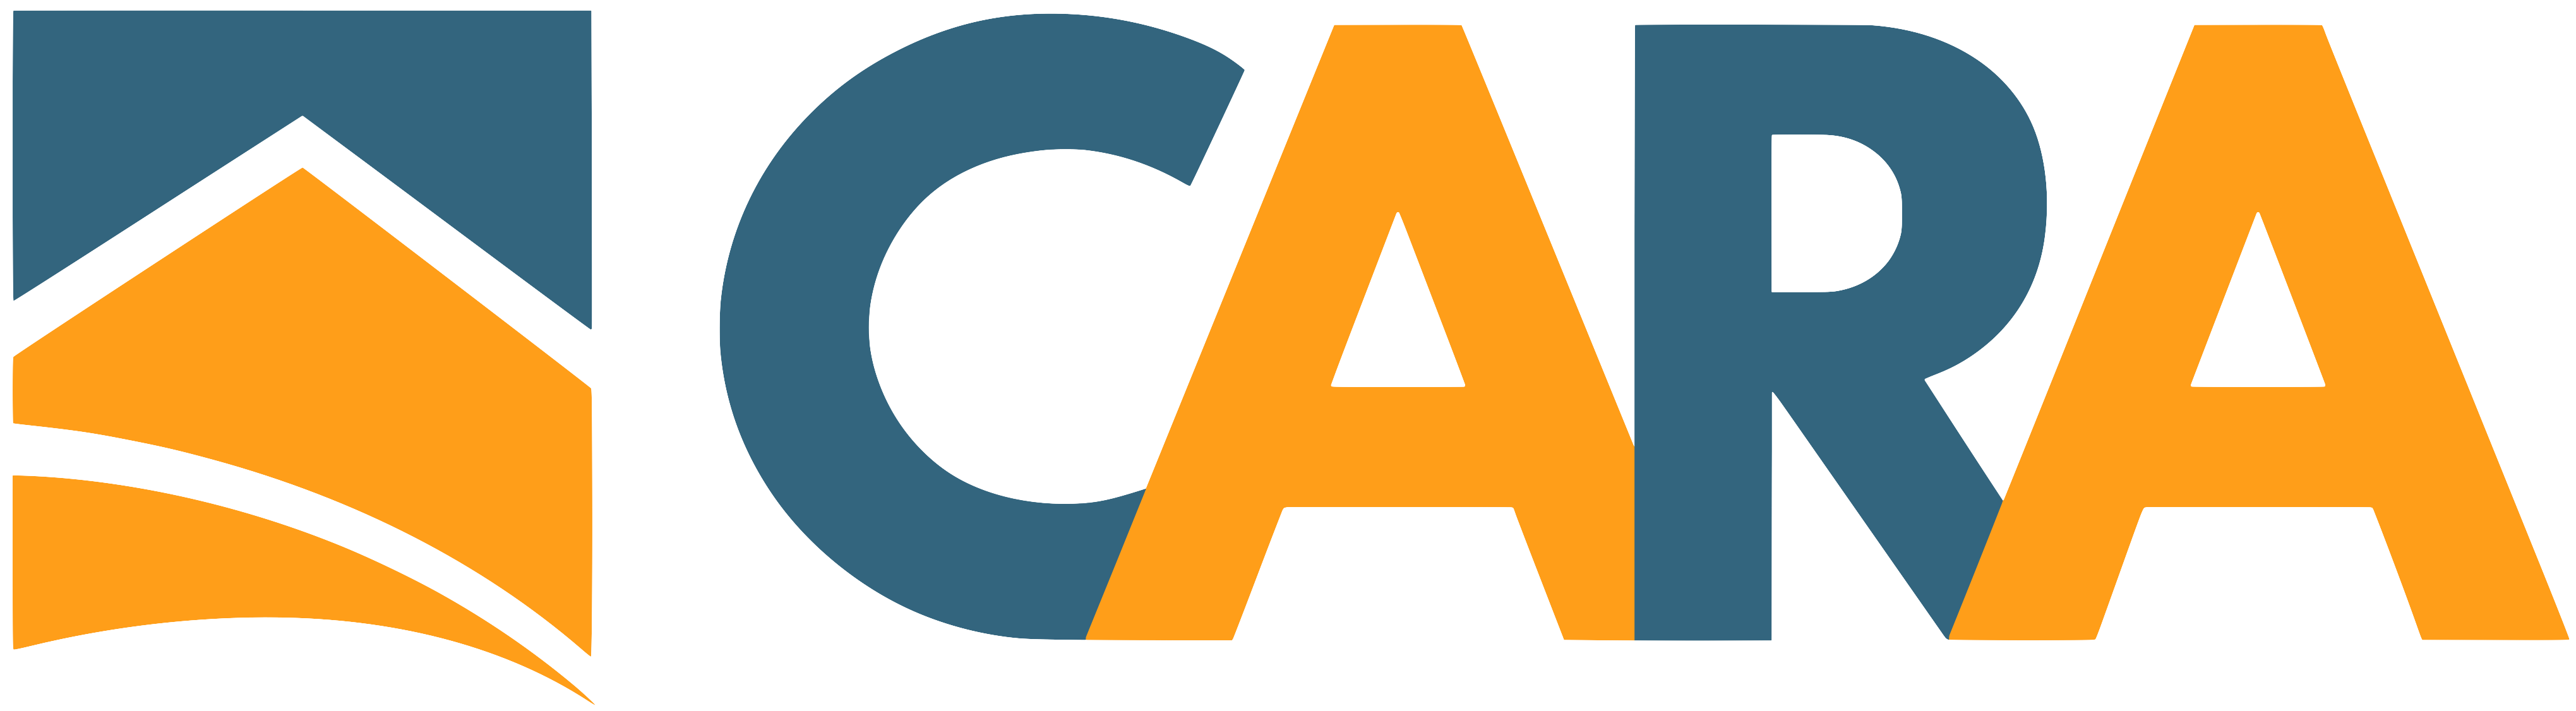 Logo for Central Alberta Realtors Association on a transparent background